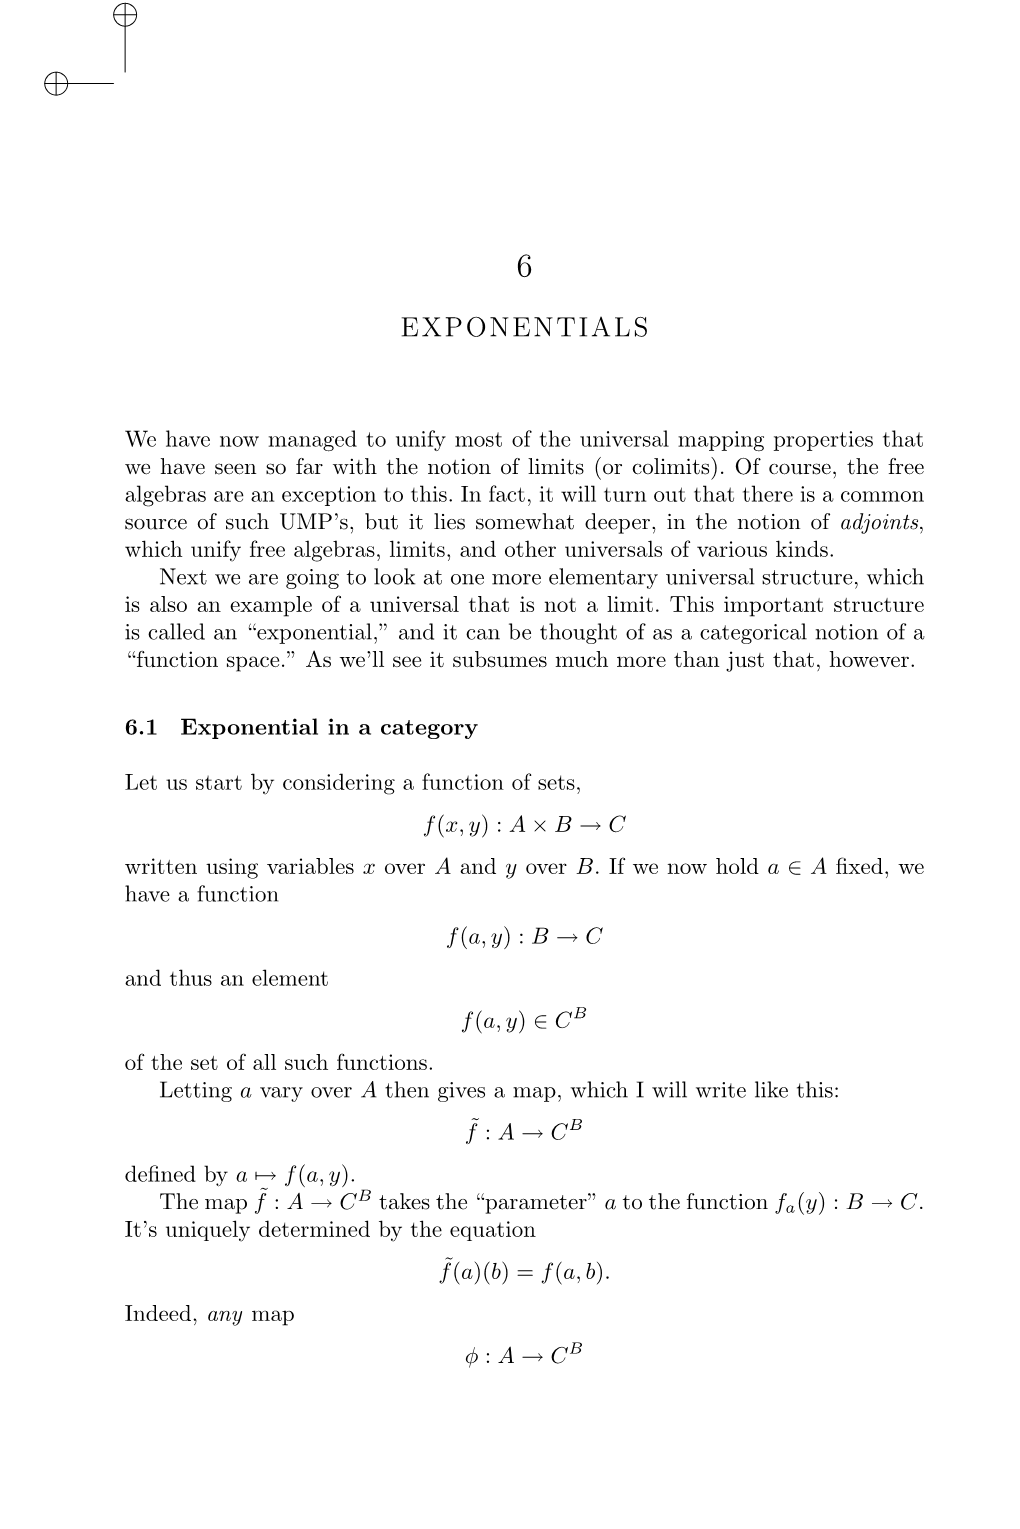 Exponentials